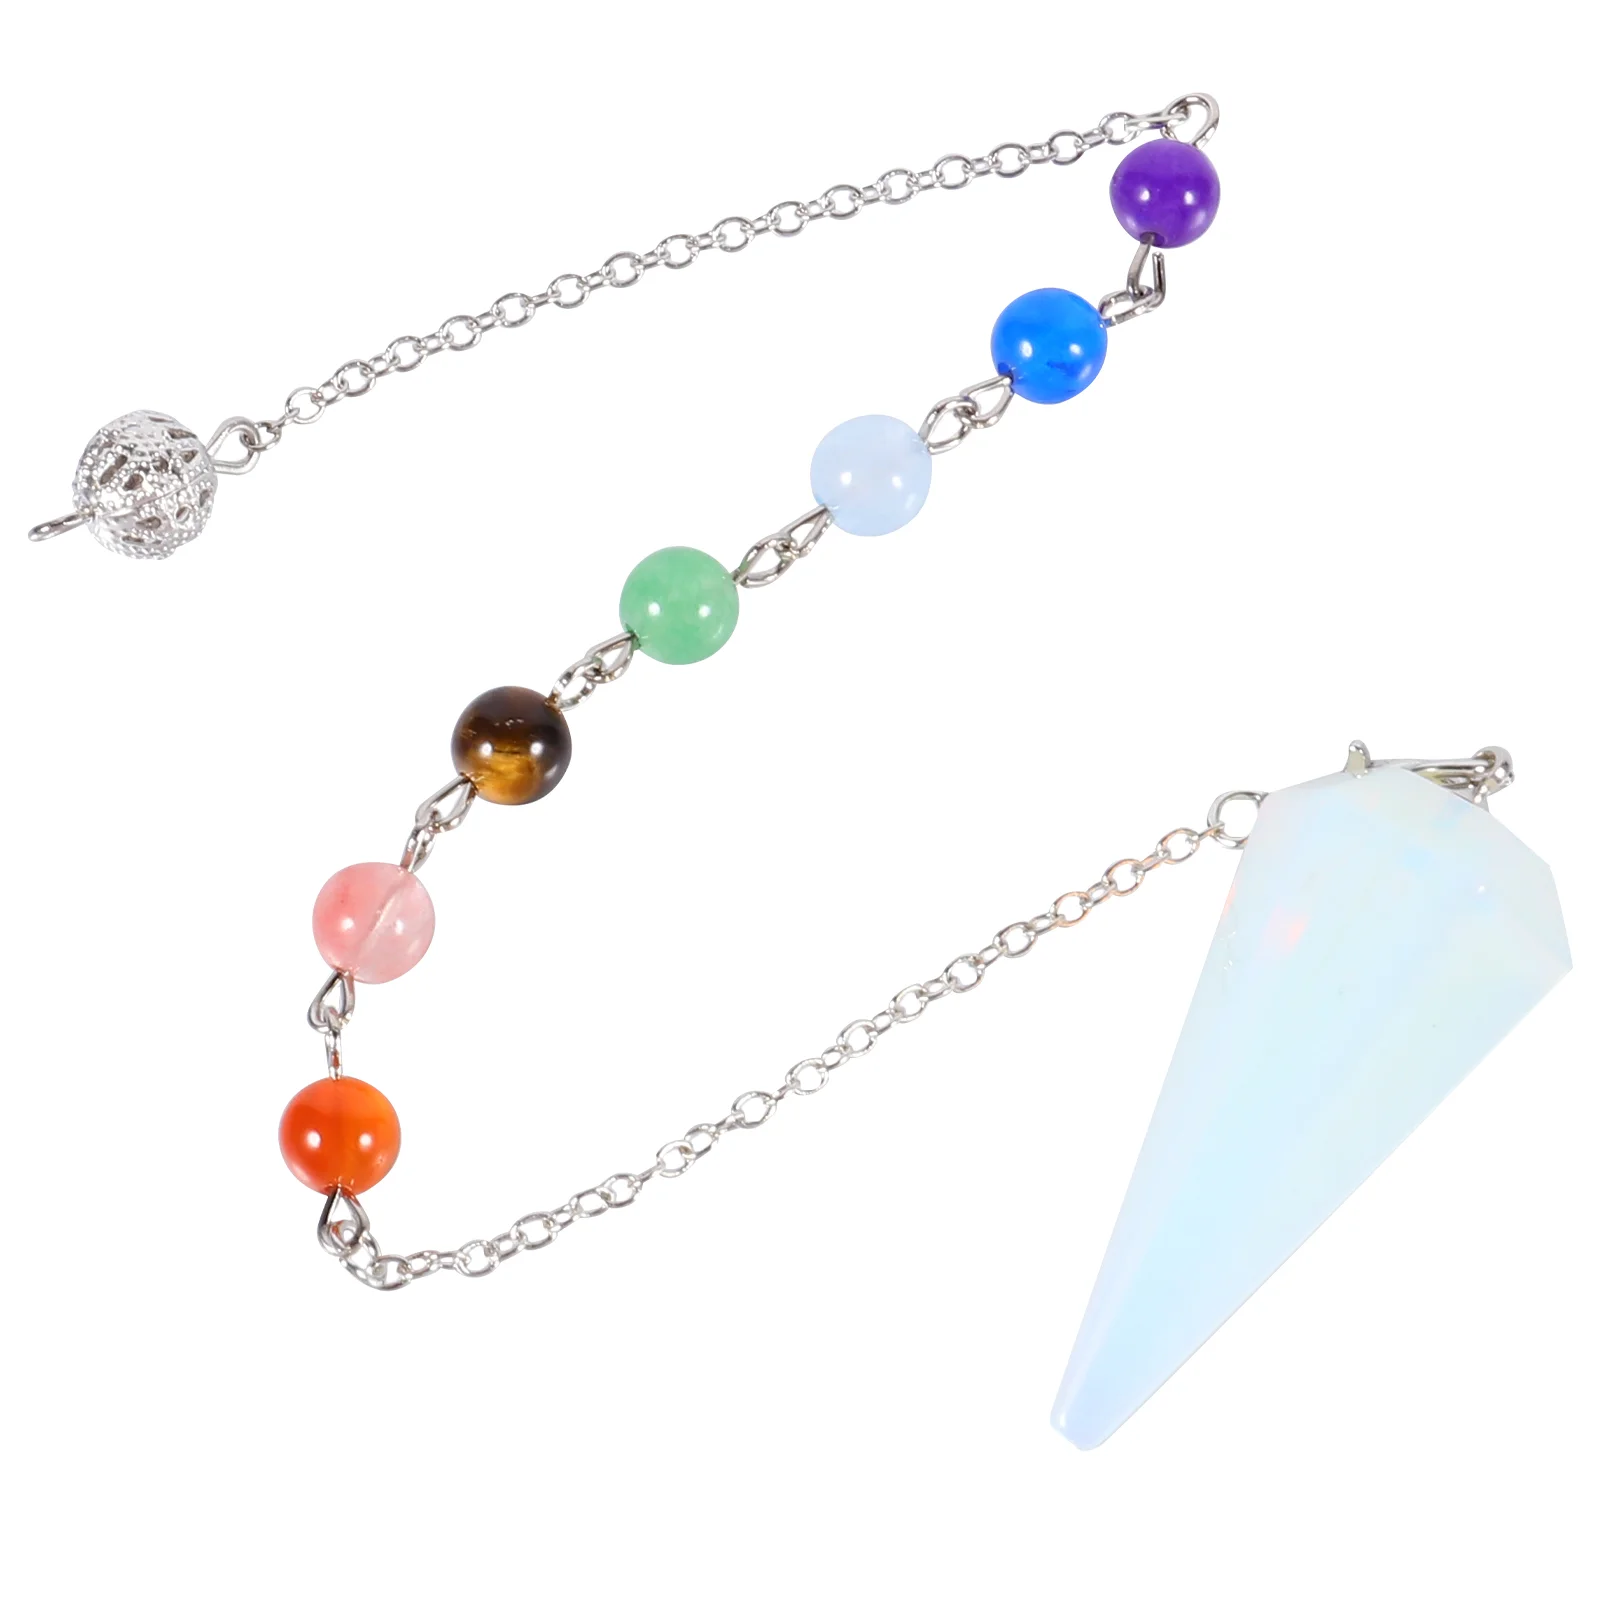 

Hexagonal Cone Pendant Bead Necklace Delicate Crystal Pendulum DIY Jewelry Taper